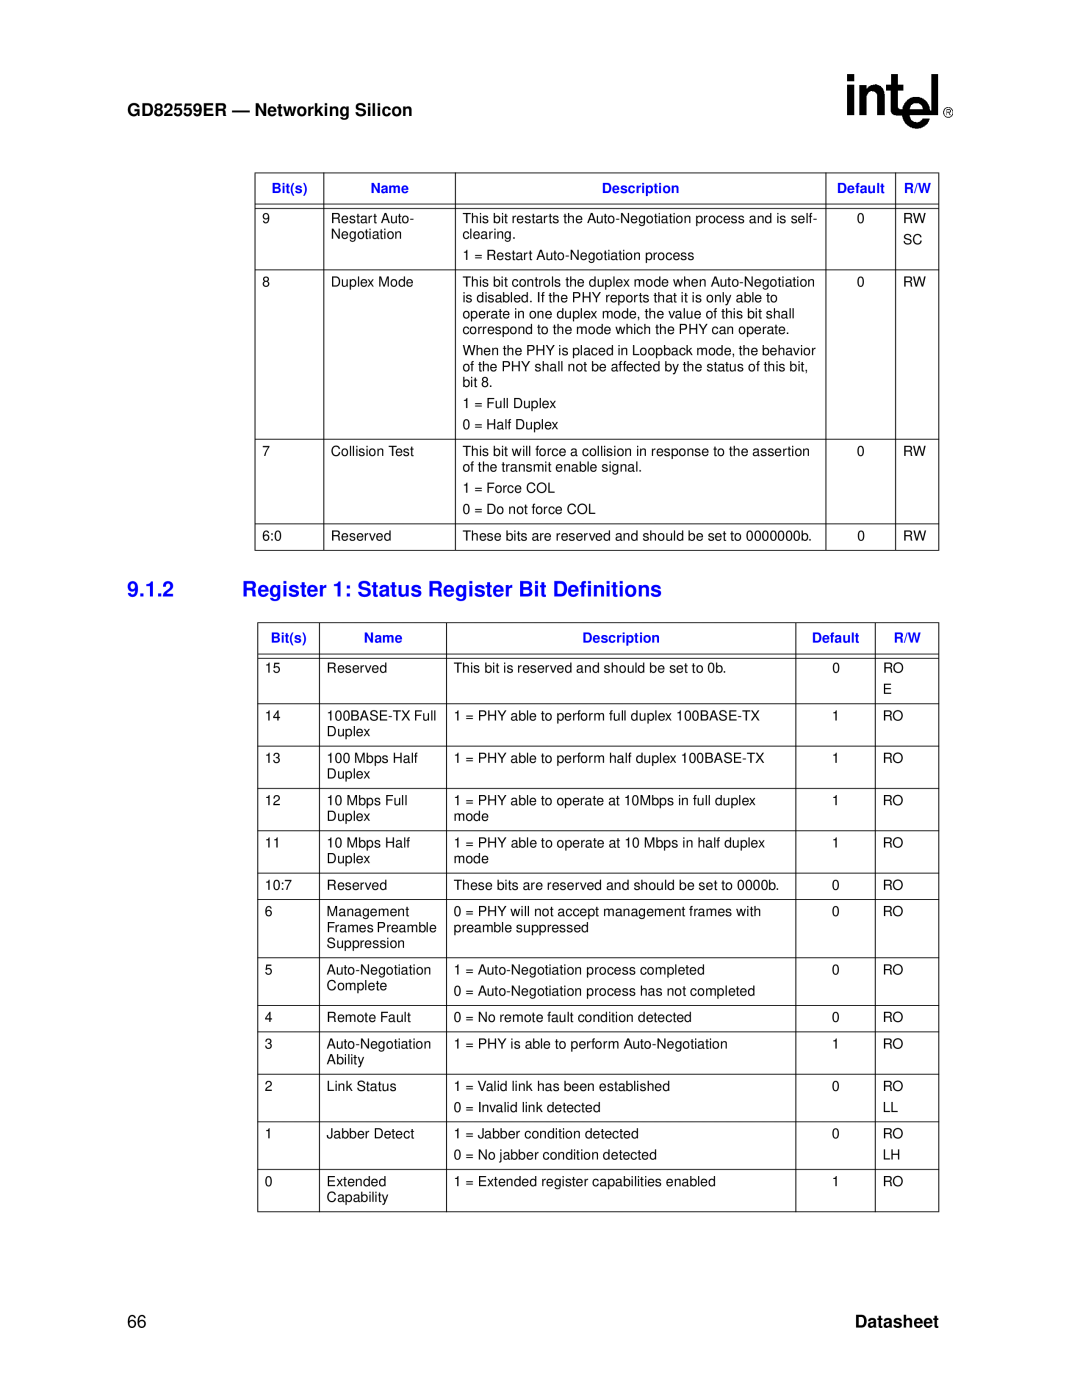 Intel manual Register 1 Status Register Bit Definitions, GD82559ER - Networking Silicon, Datasheet 